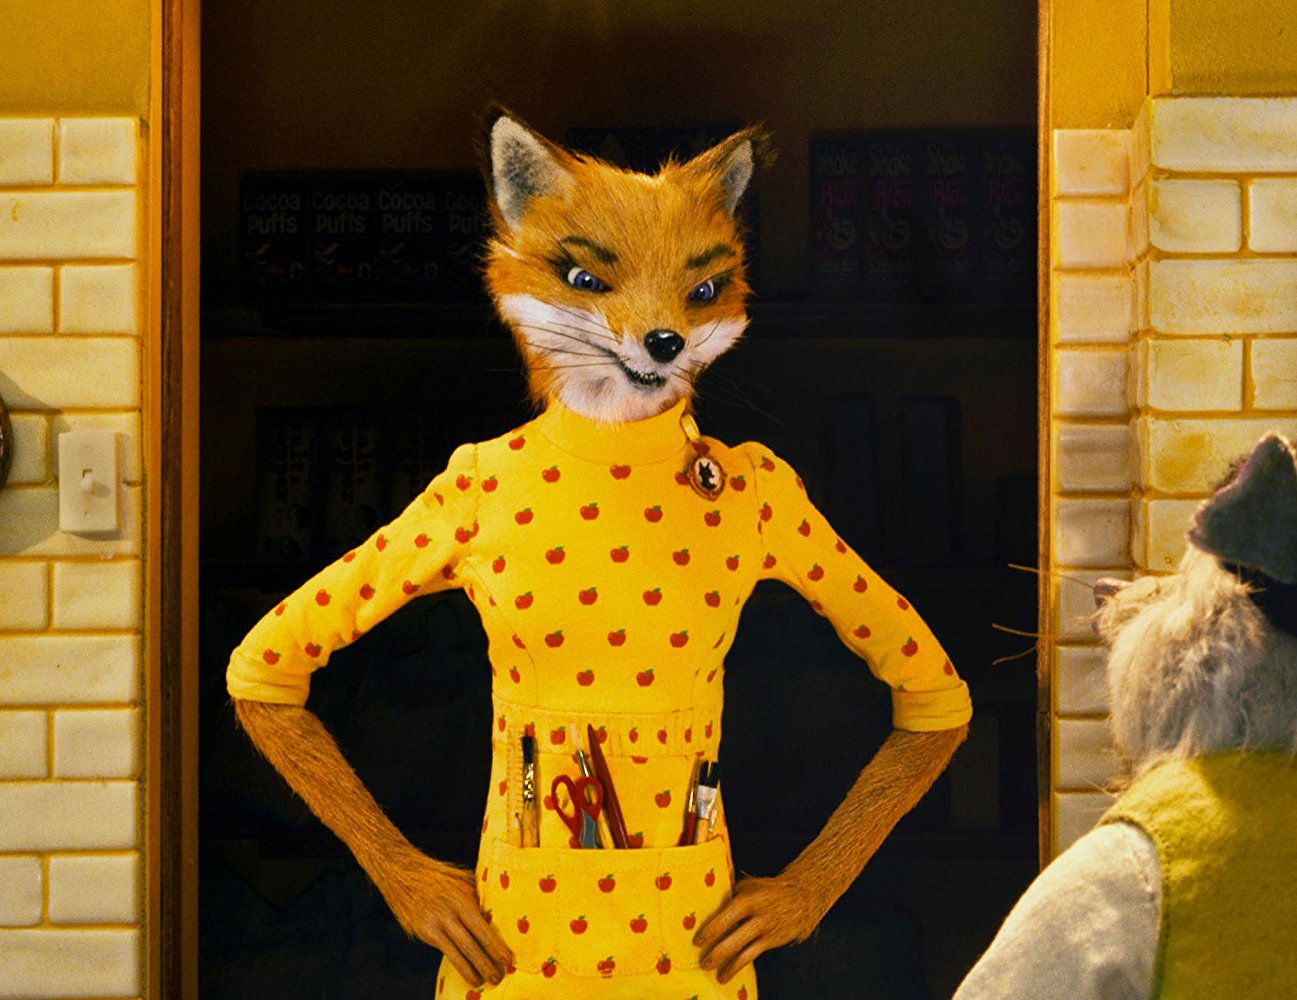 Mrs. Fox